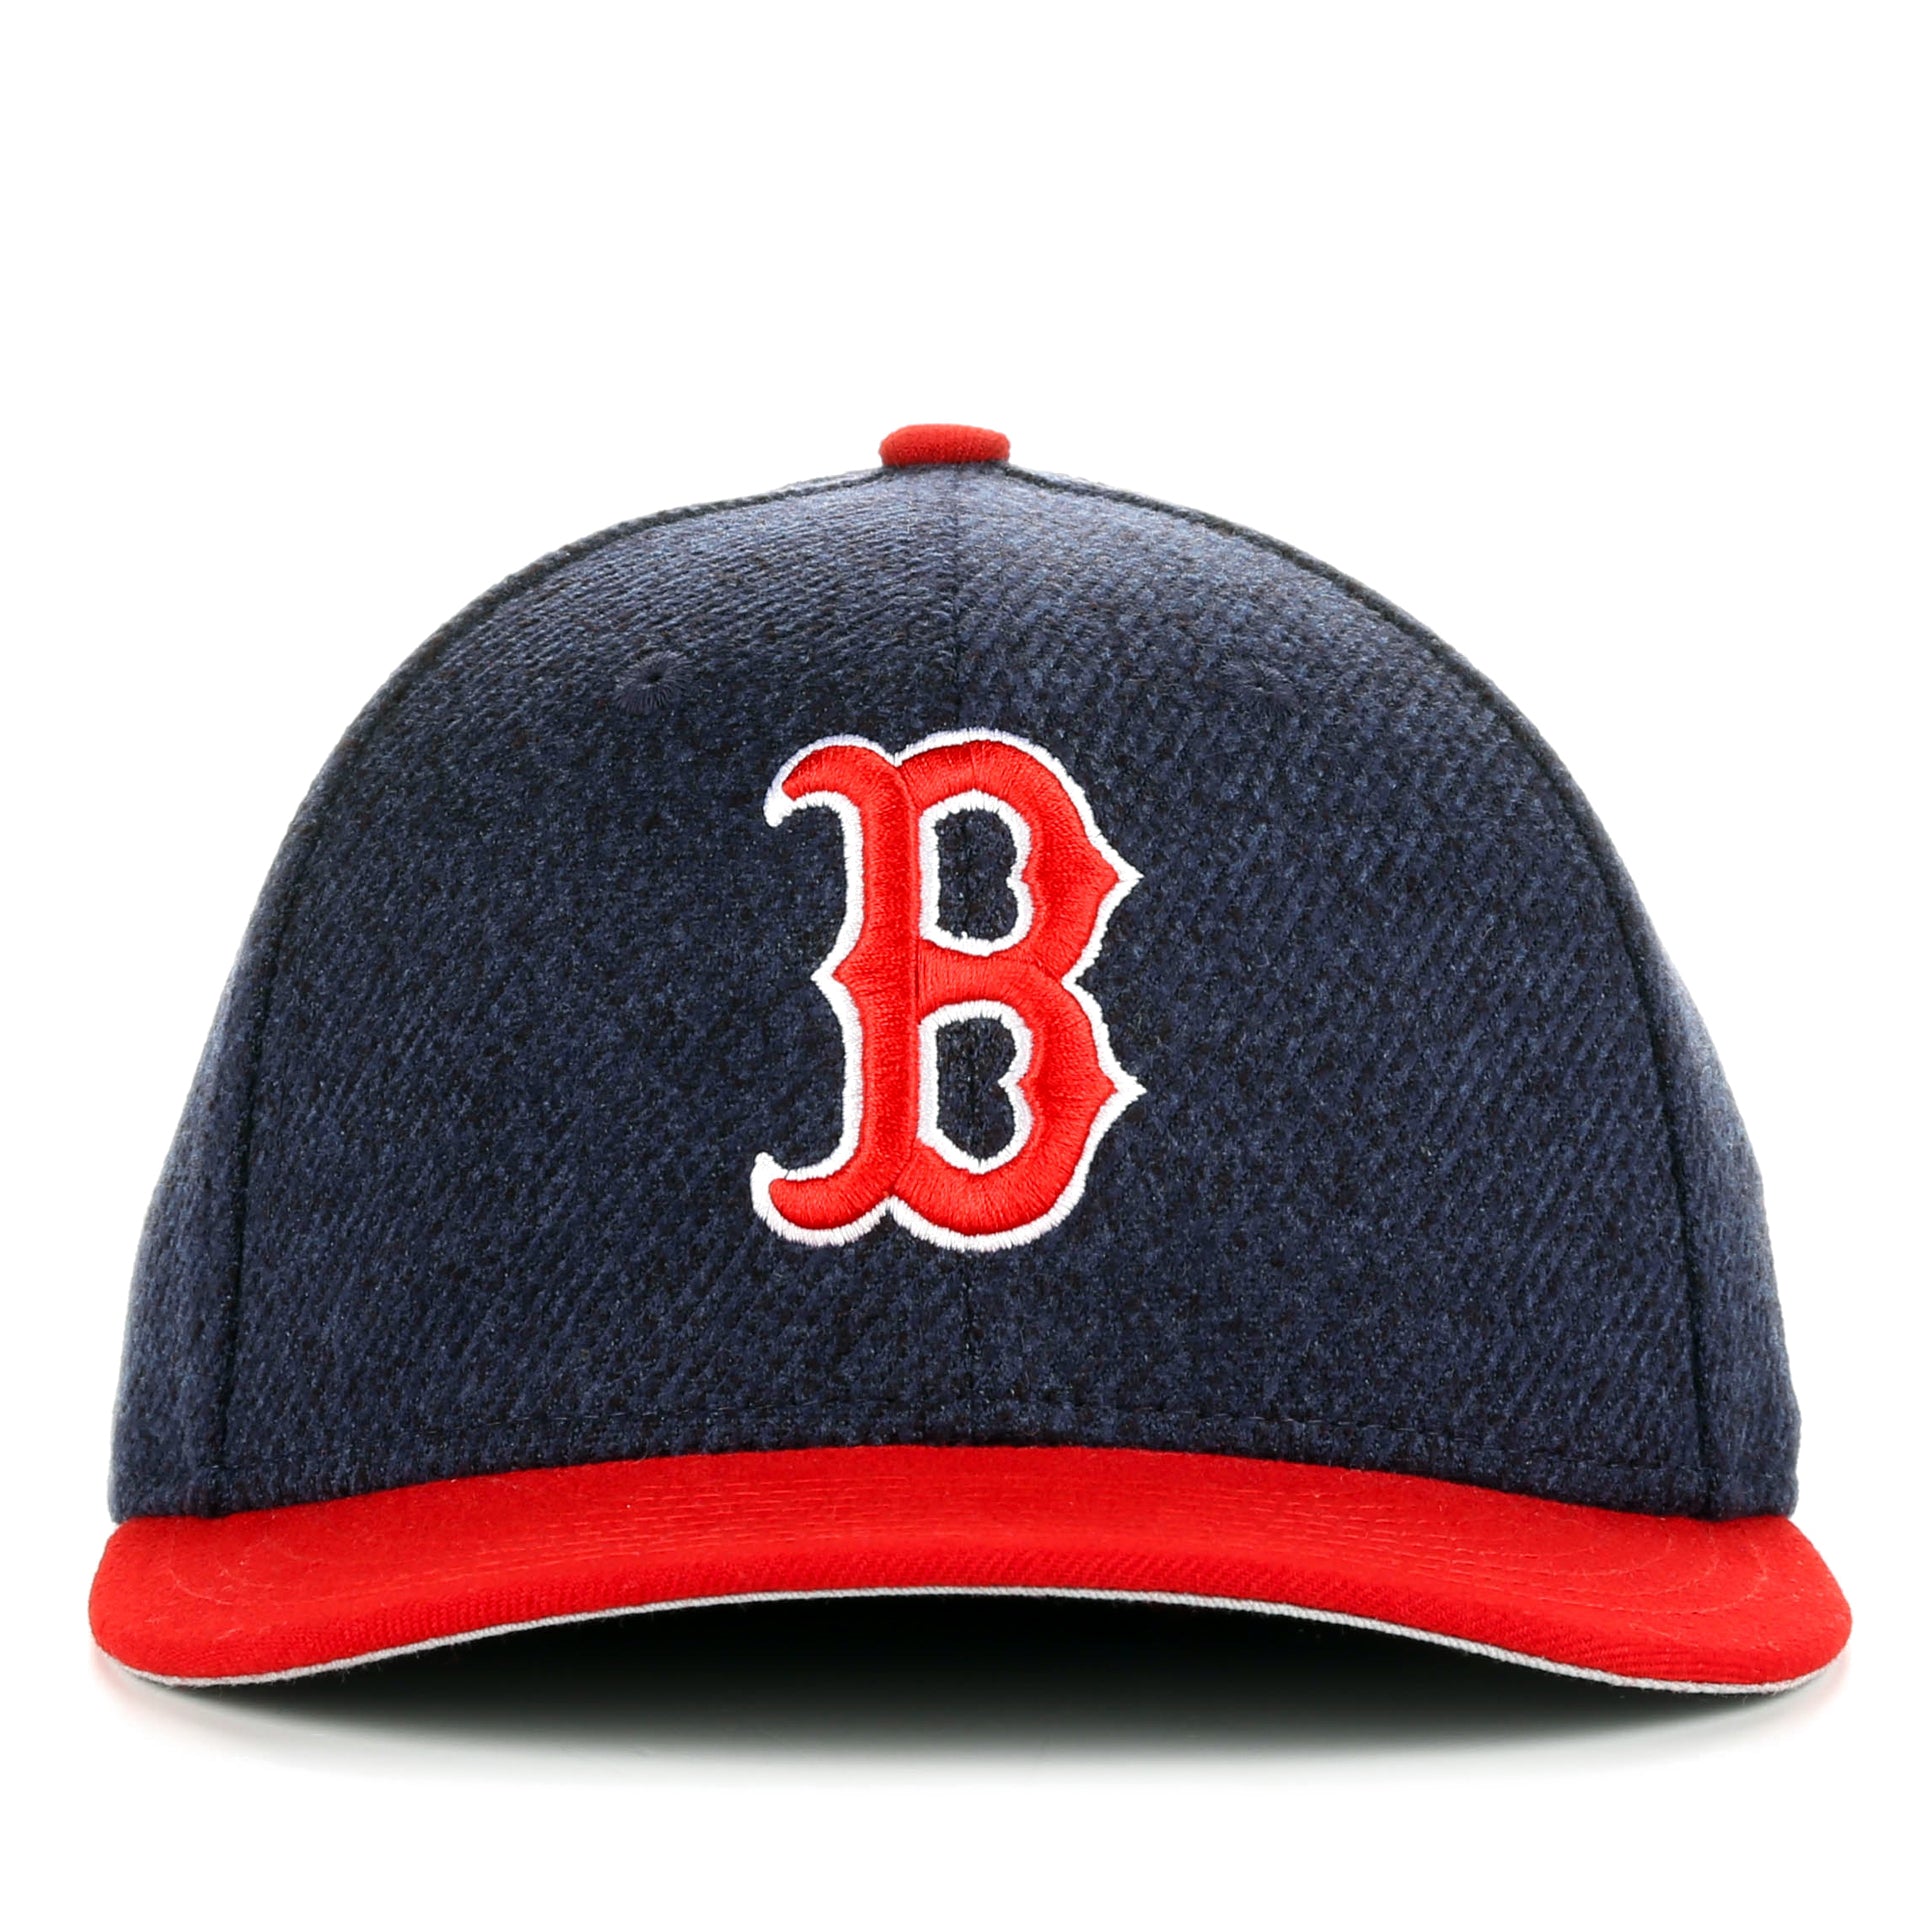 New 9Fifty Classic Trim Snapback - Boston Red Sox/Navy - Star